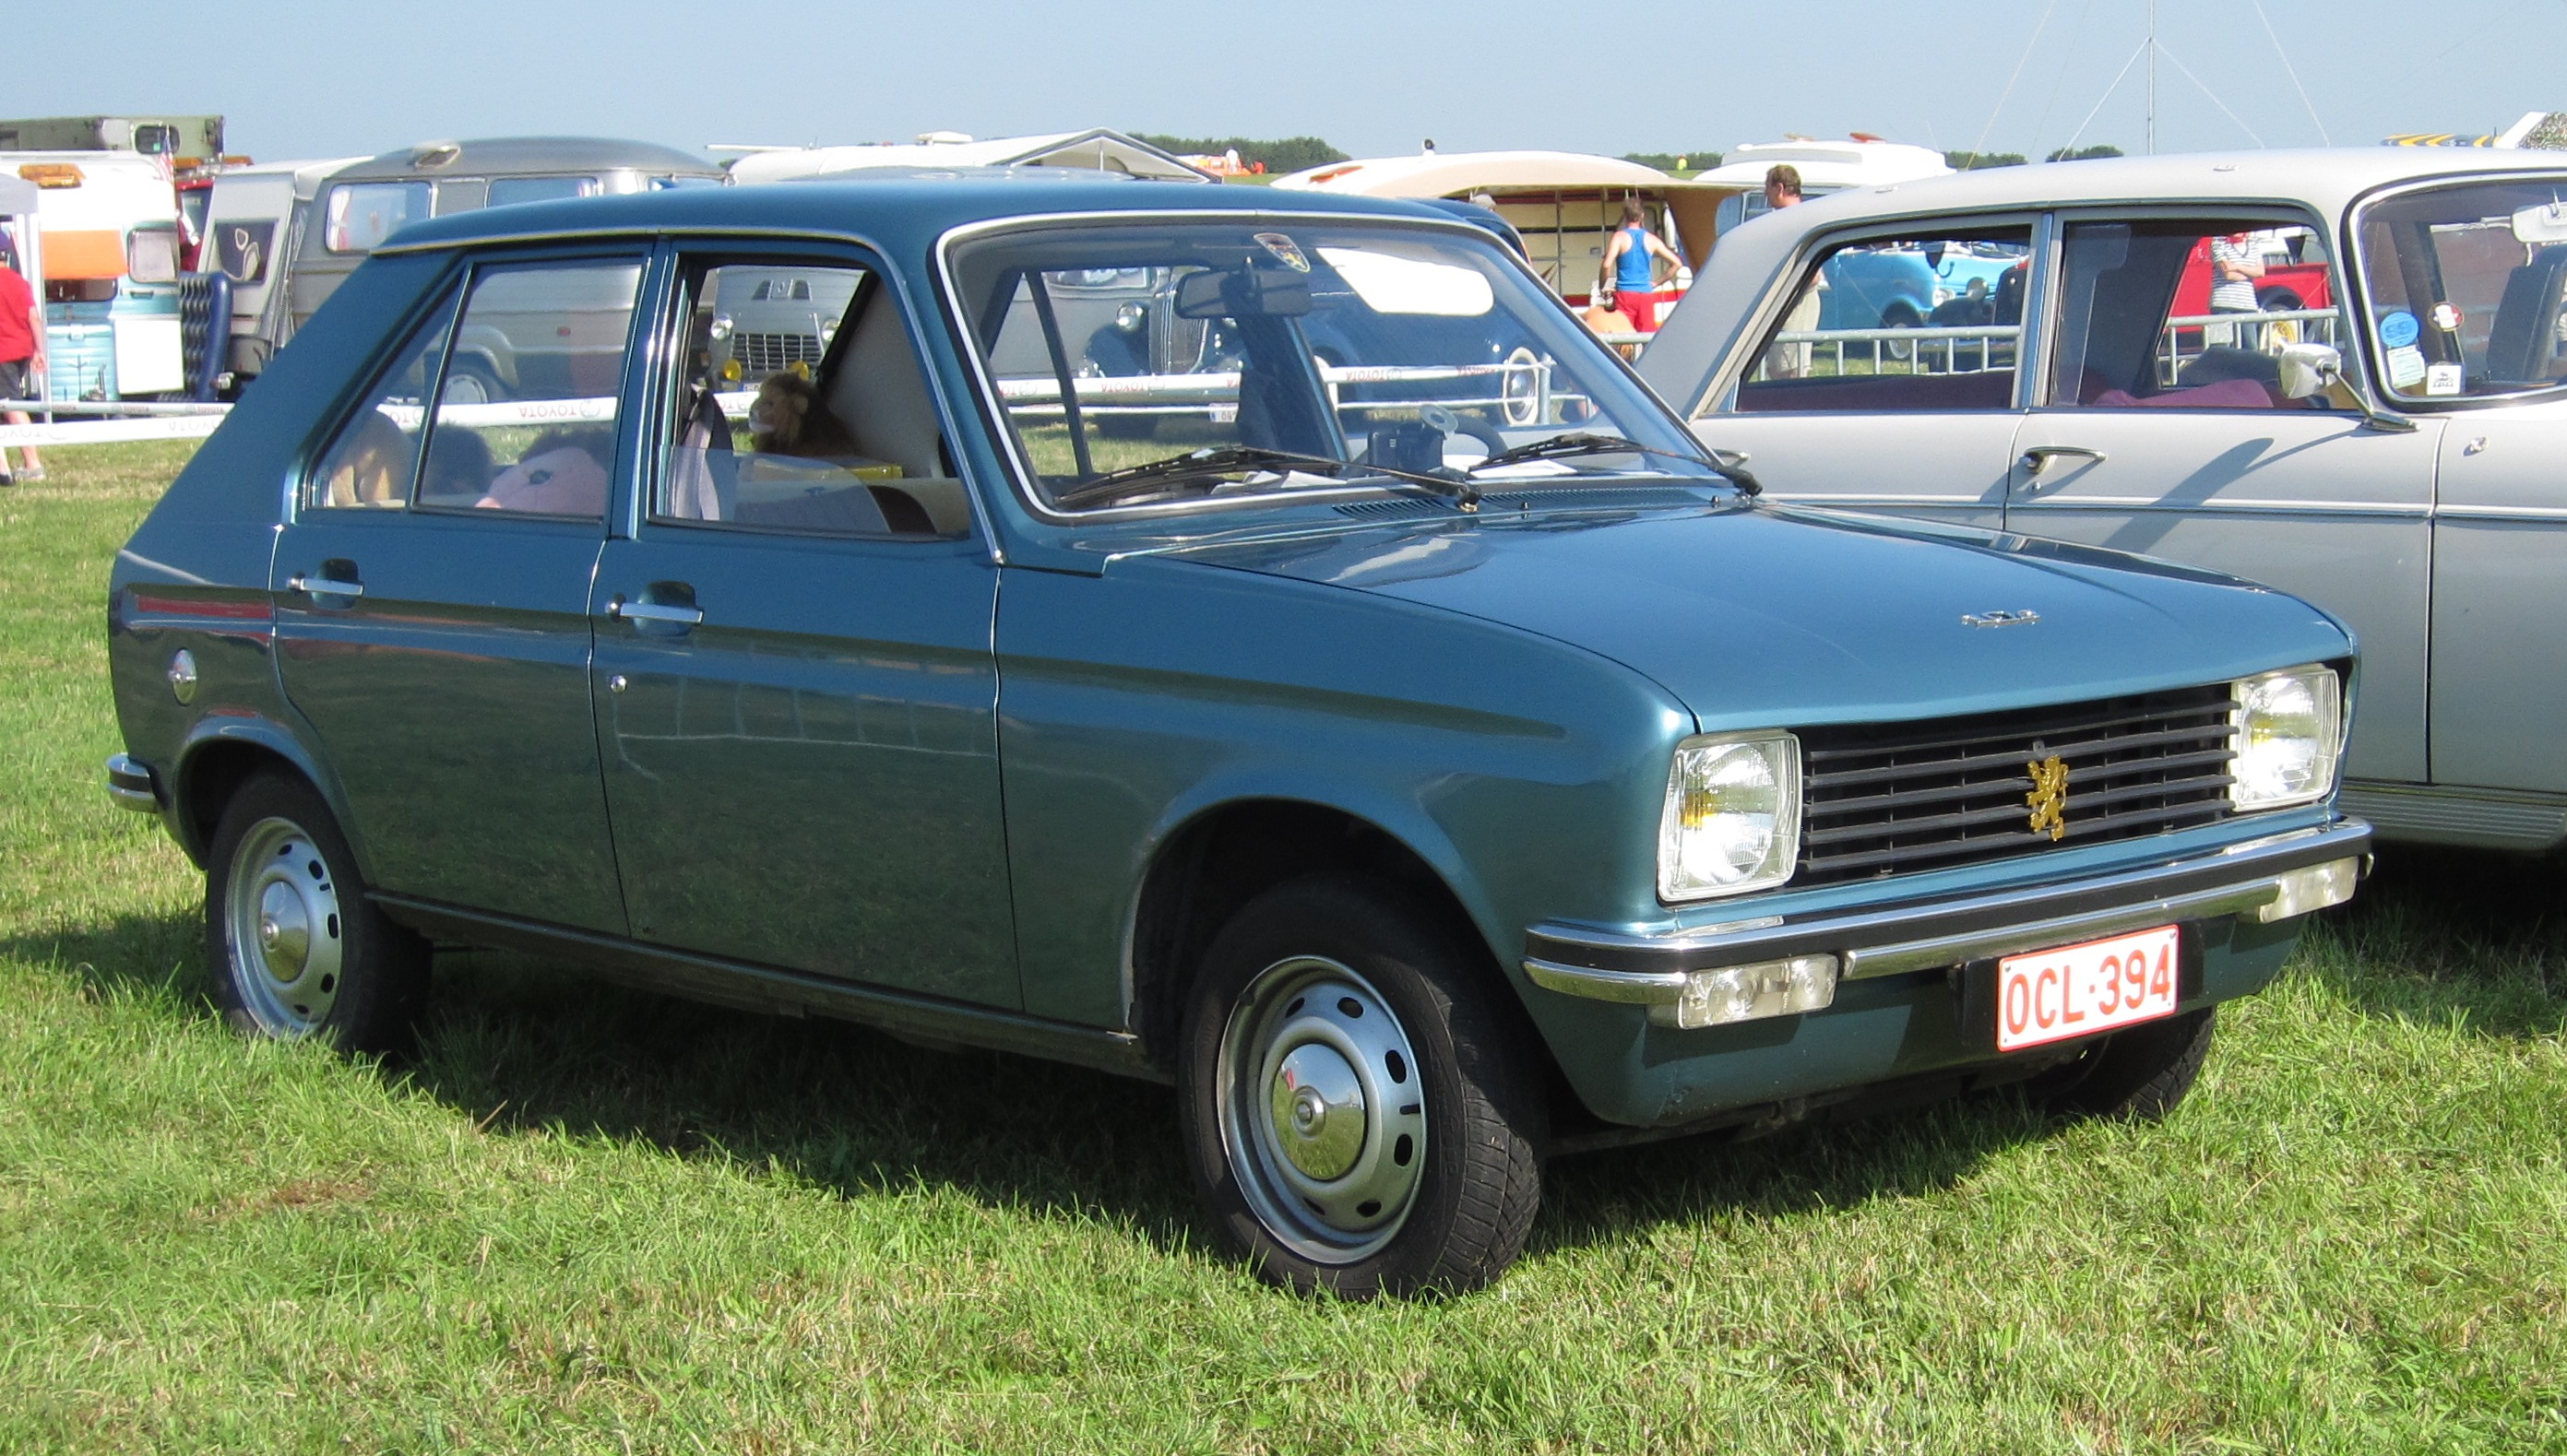 Datei:Peugeot 307 CC Facelift front.jpg – Wikipedia